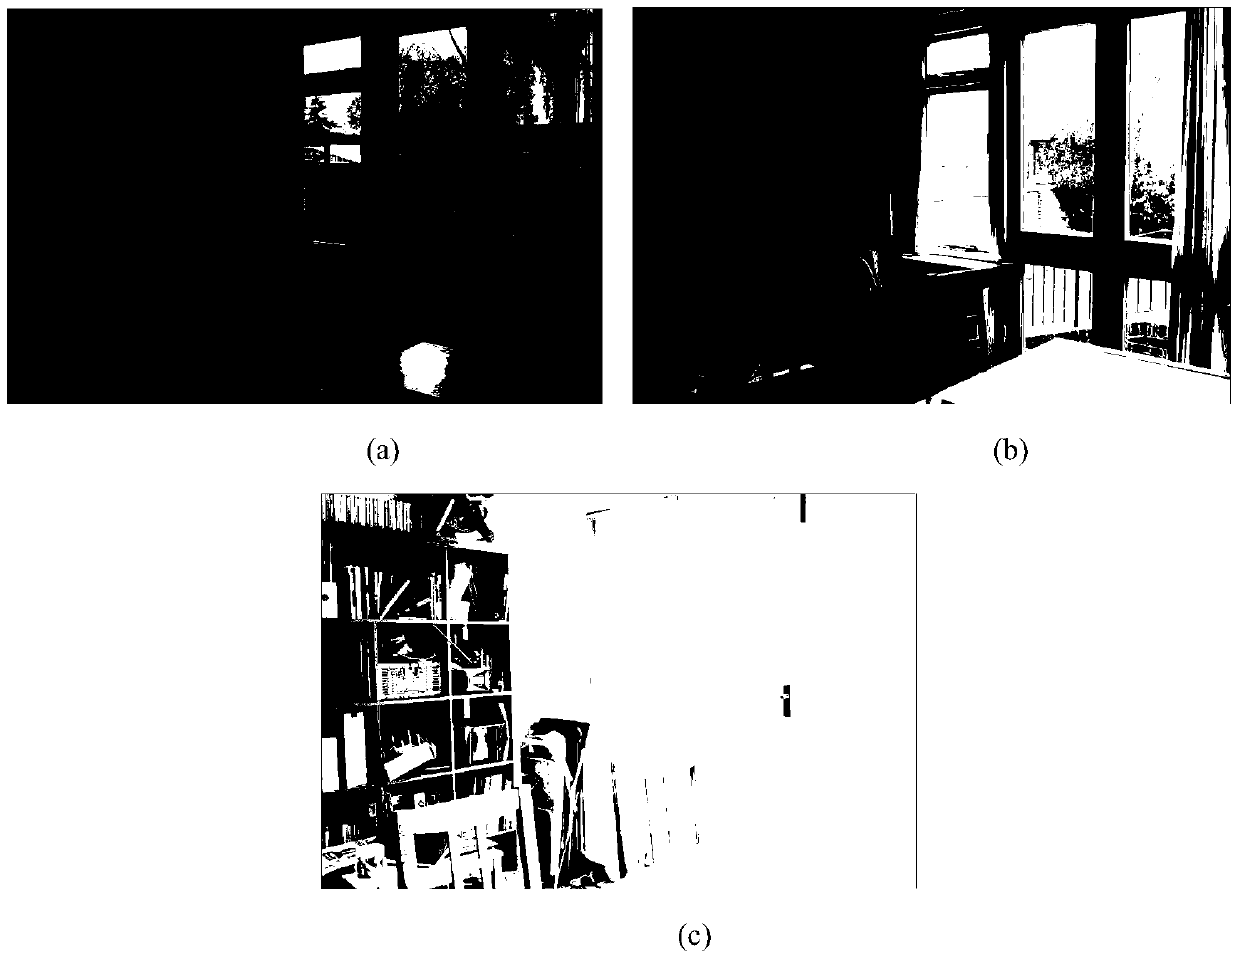 Multi-exposure image integration method based on bilateral filtering